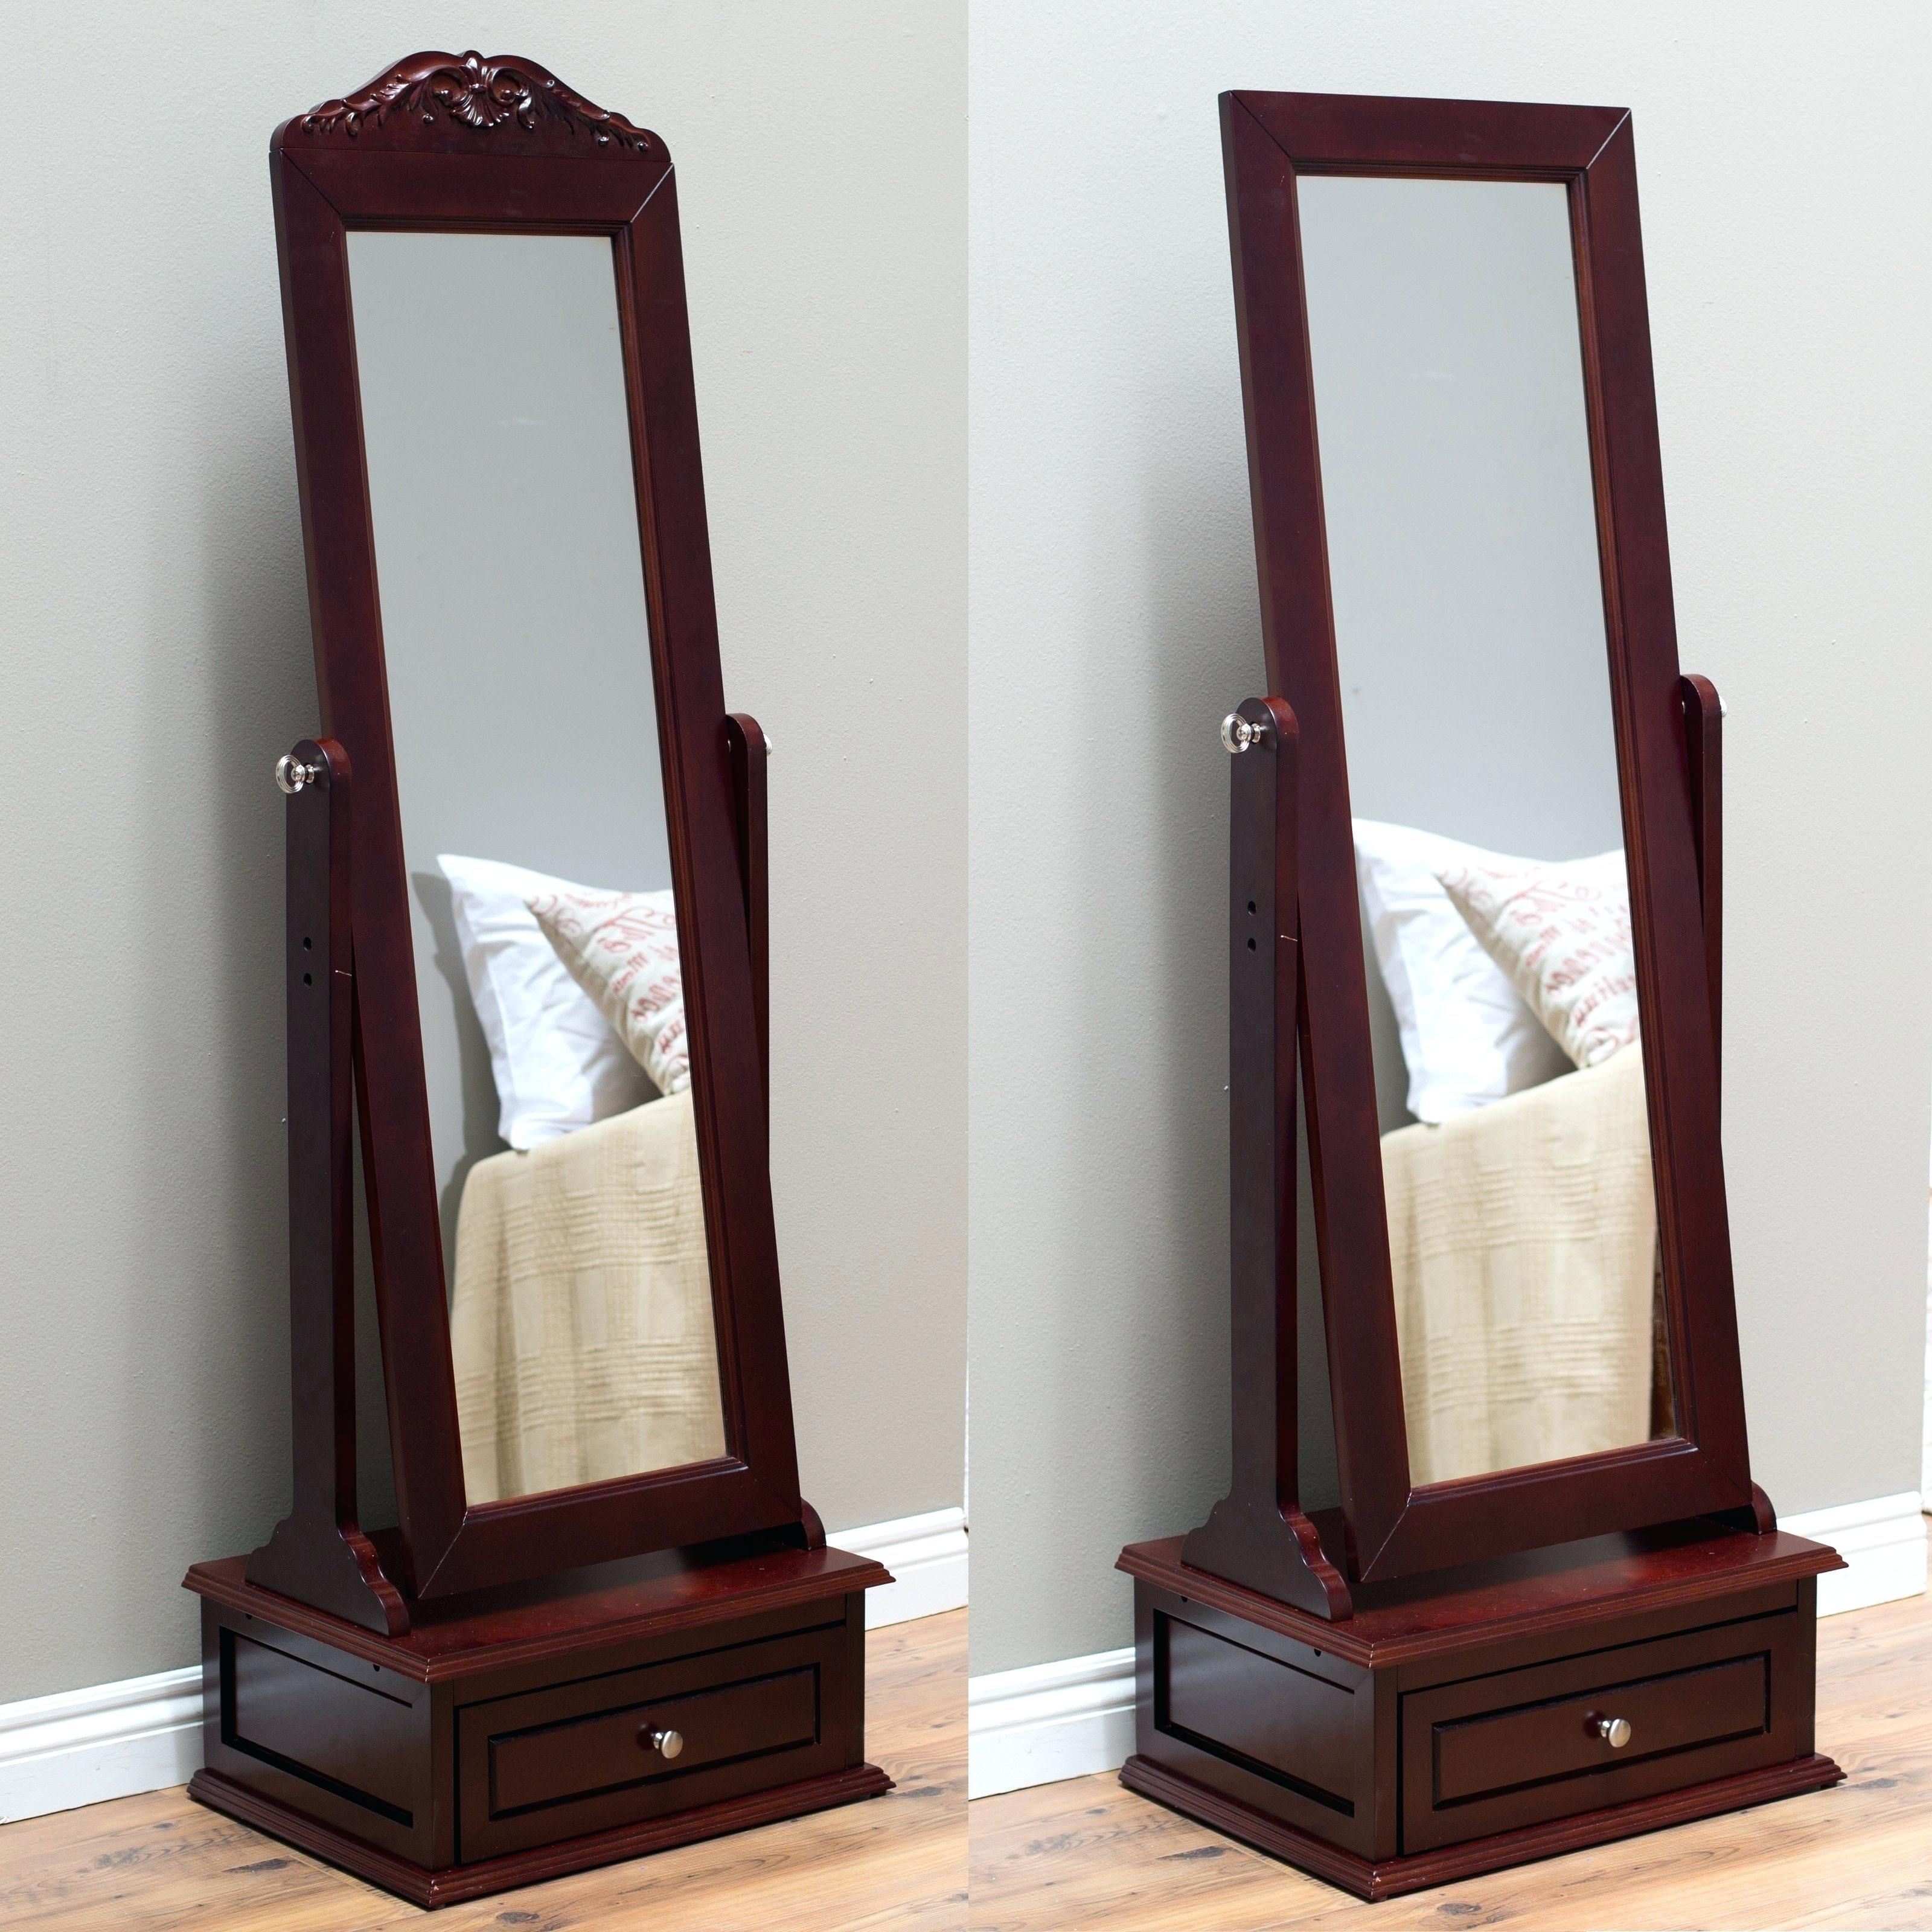 Triple Folding Mirror Decorative Full Length Mirrors For Sale 62x With Decorative Full Length Mirror (View 7 of 15)